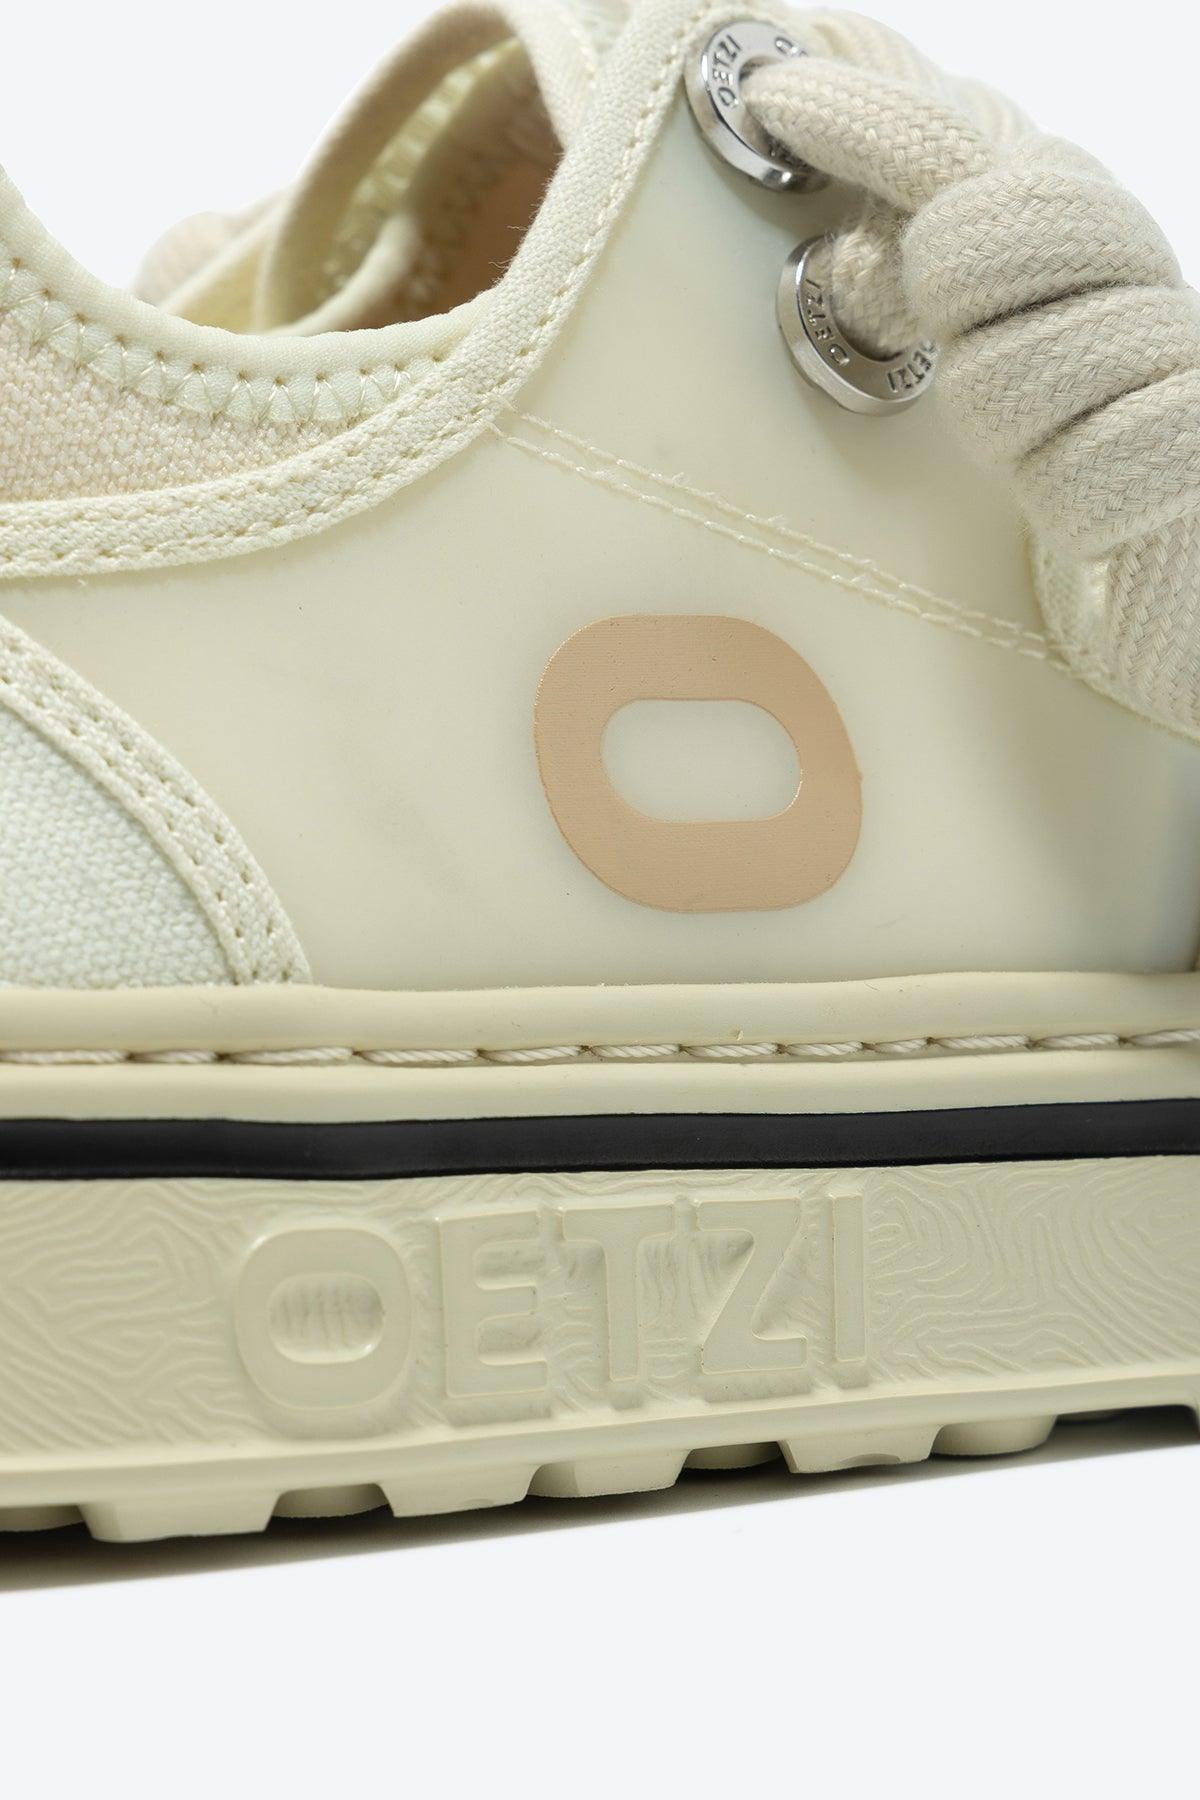 OETZIight Unisex Sneakers For Women And Men - Oetziceman